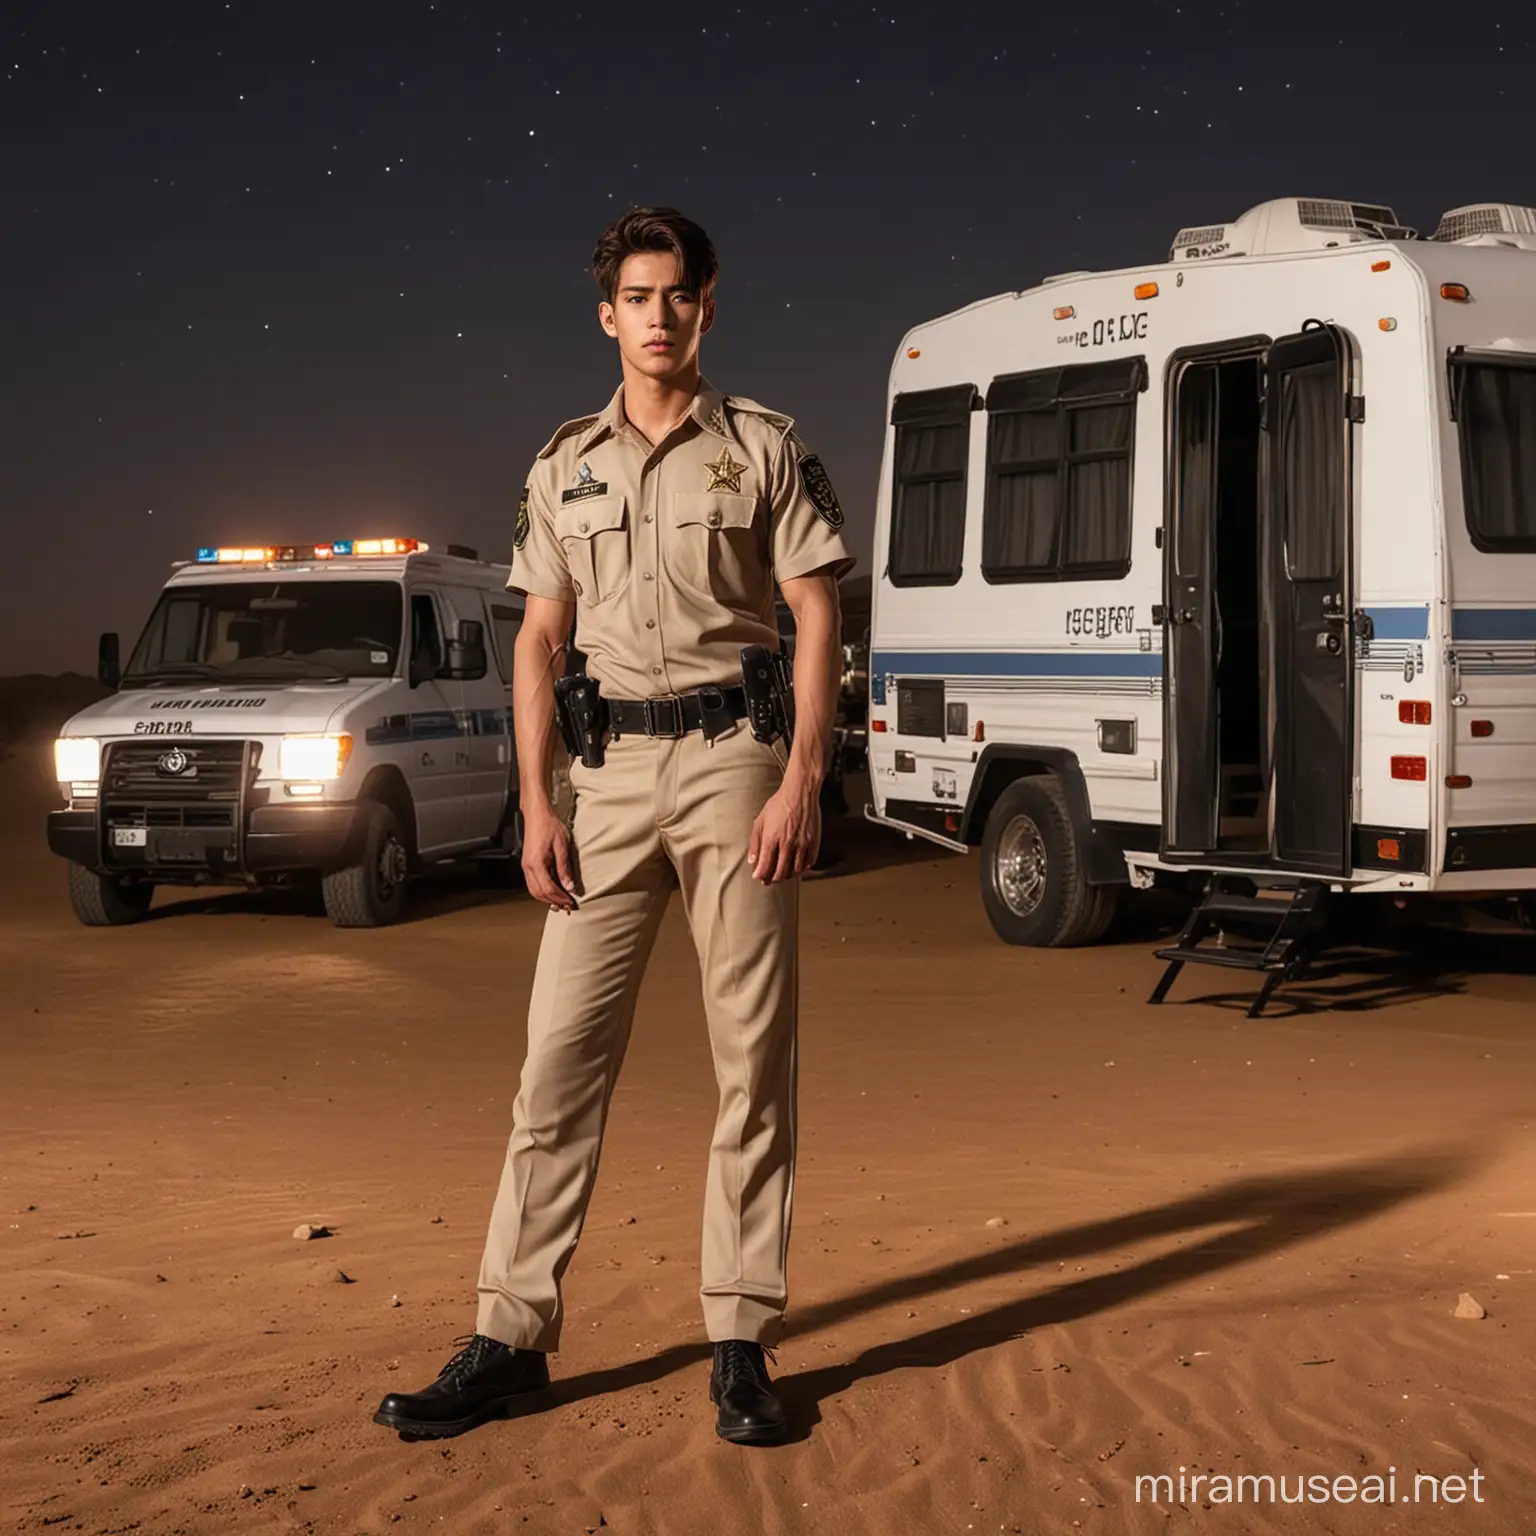 Tall muscular Kpop boy wearing sheriff uniform stand next Arab dress girl in Desert at night next to police motor home 